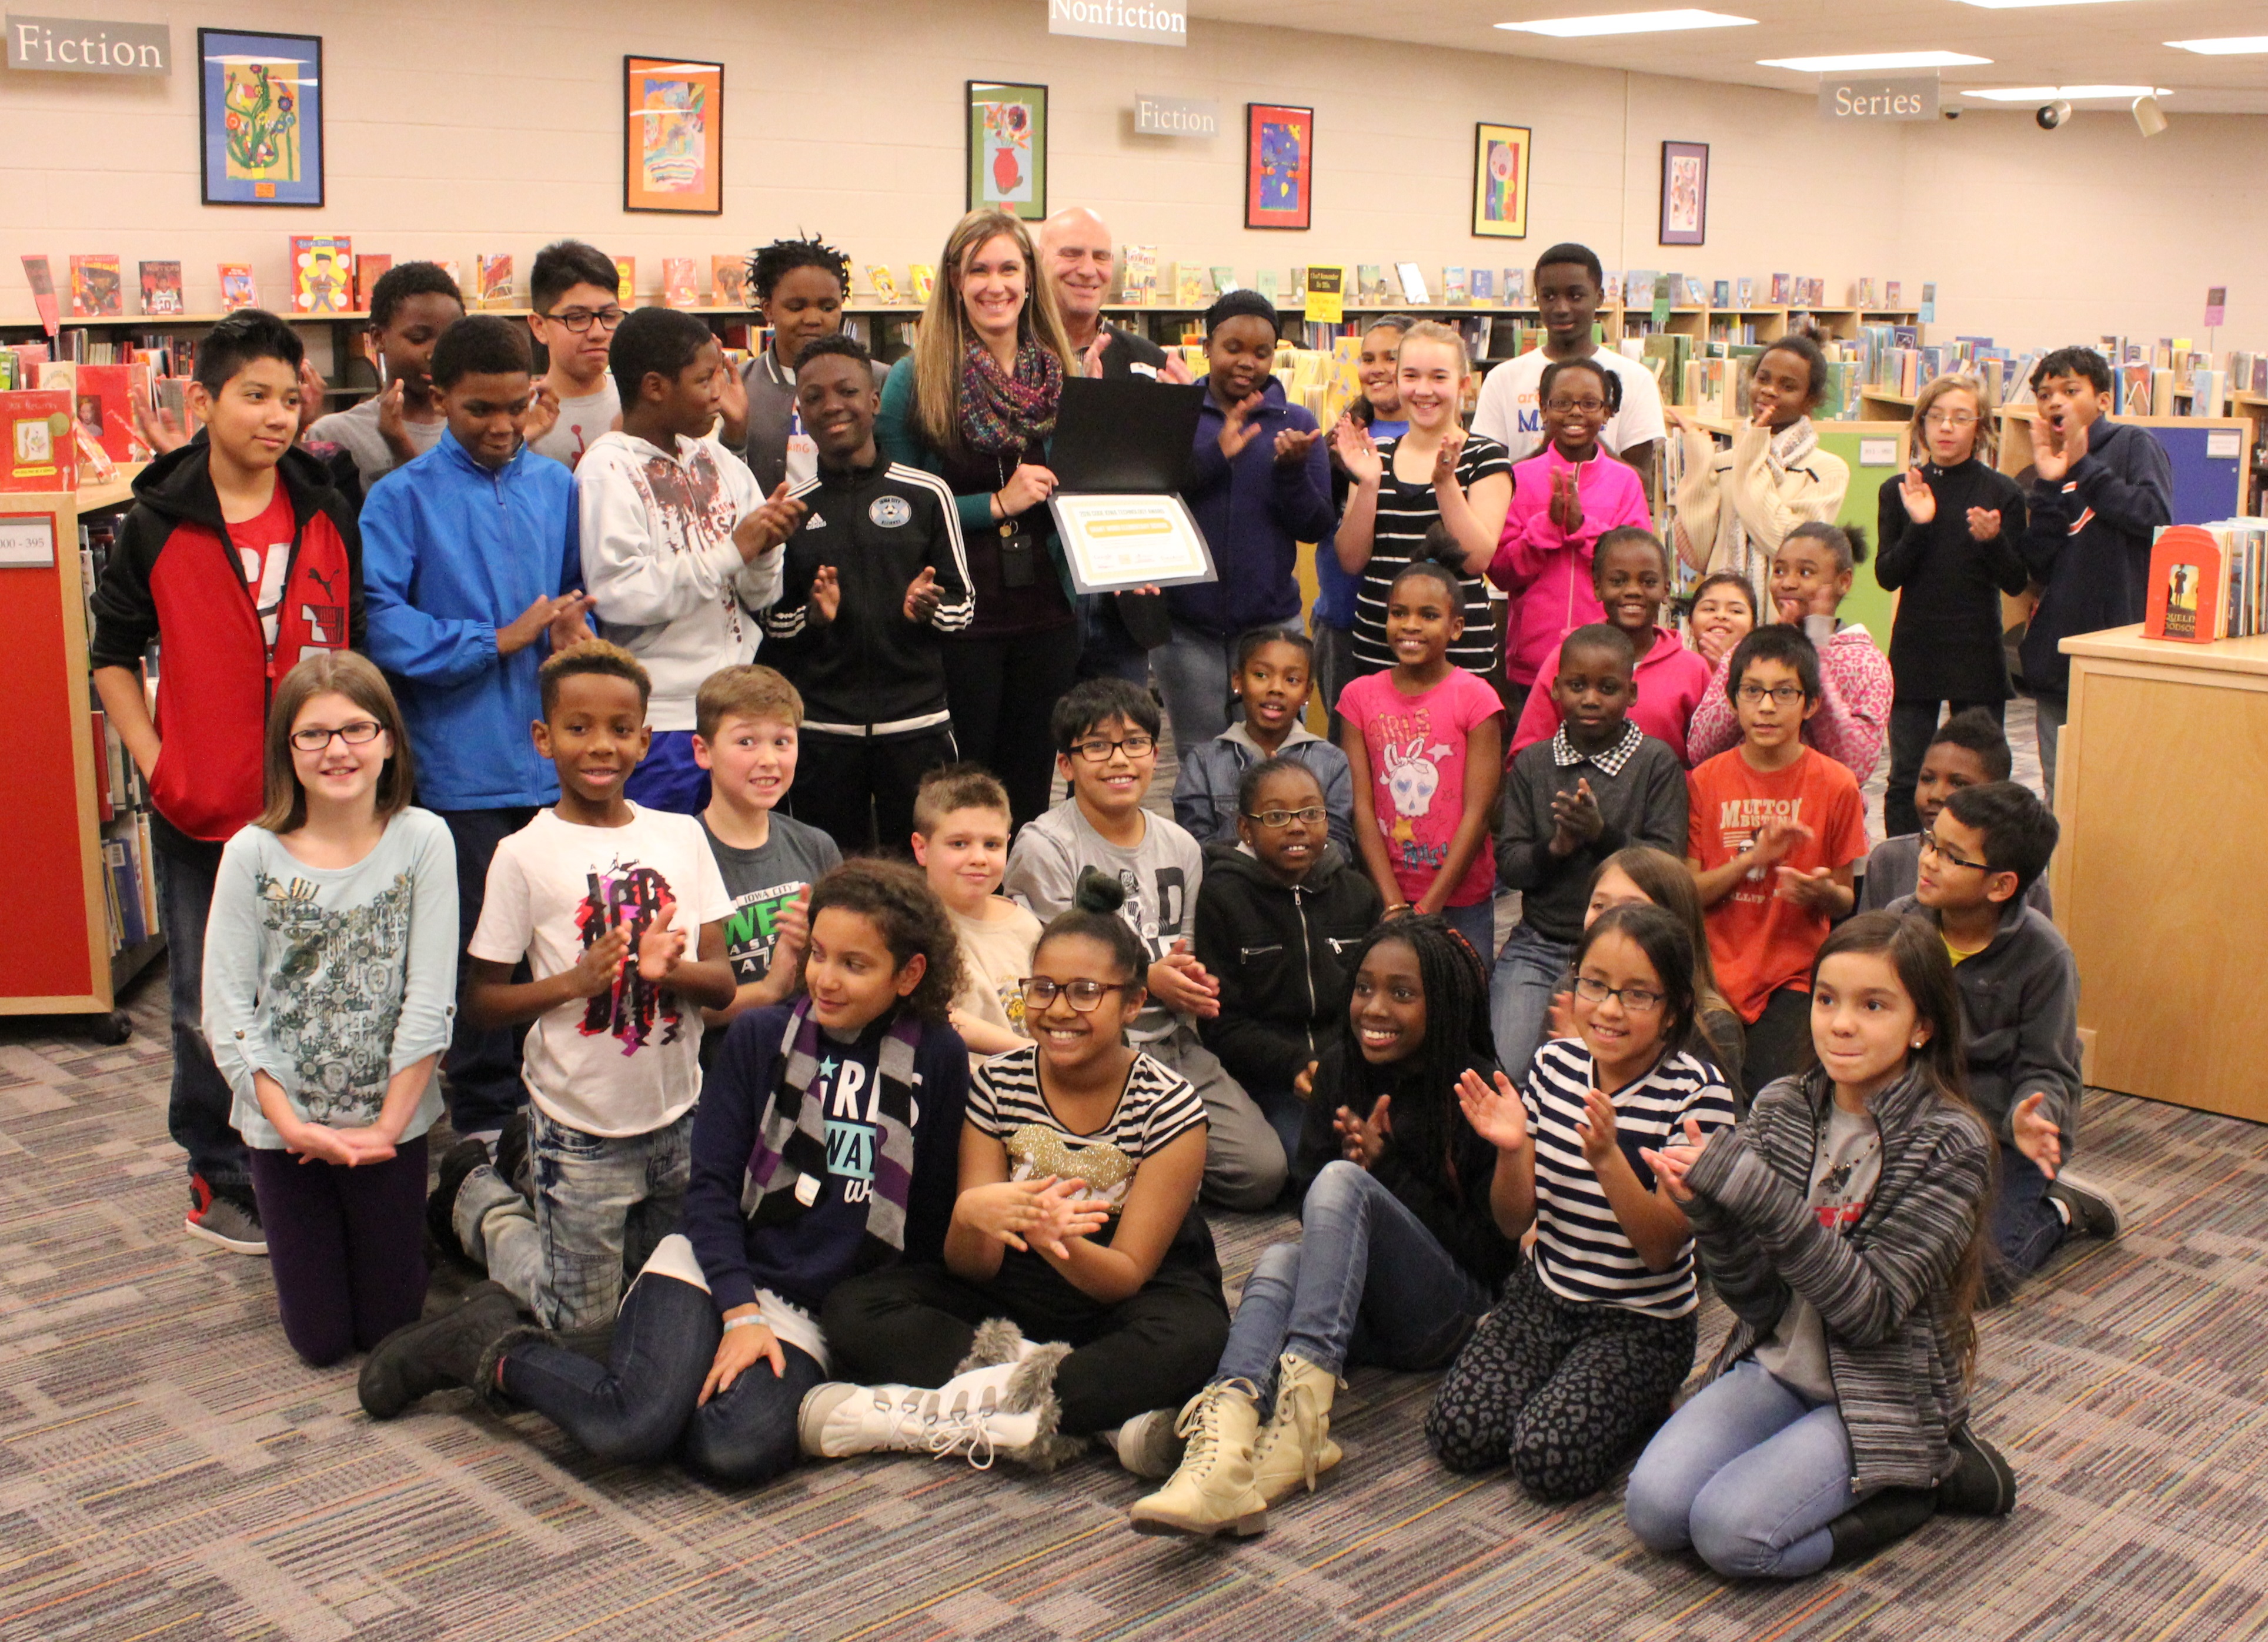 Grant Wood Elementary School receives Code Iowa Technology Award